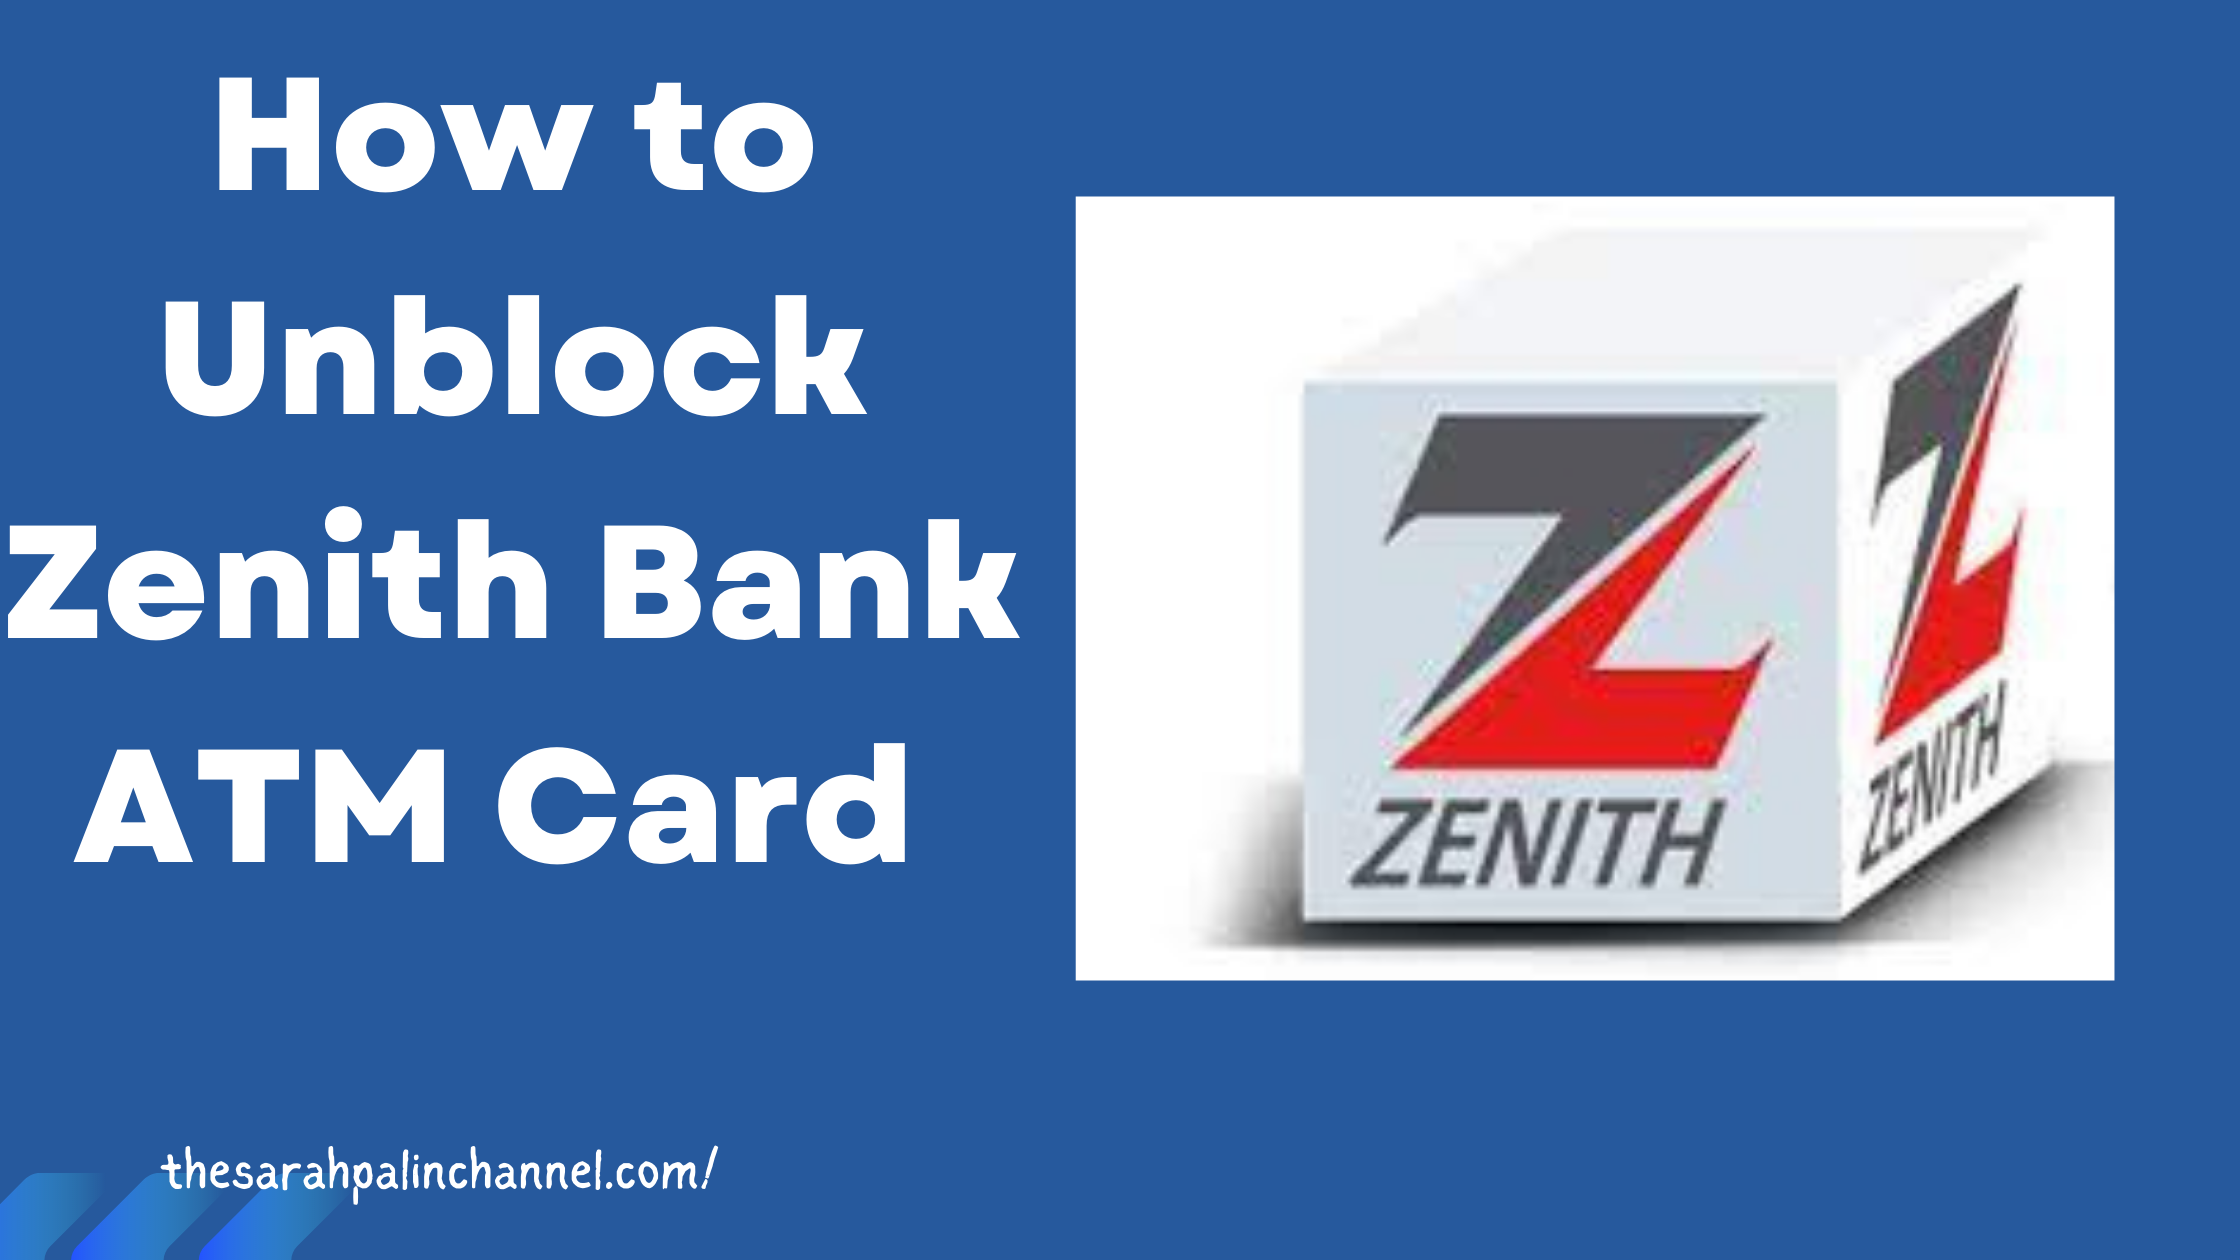 How to Unblock Zenith Bank